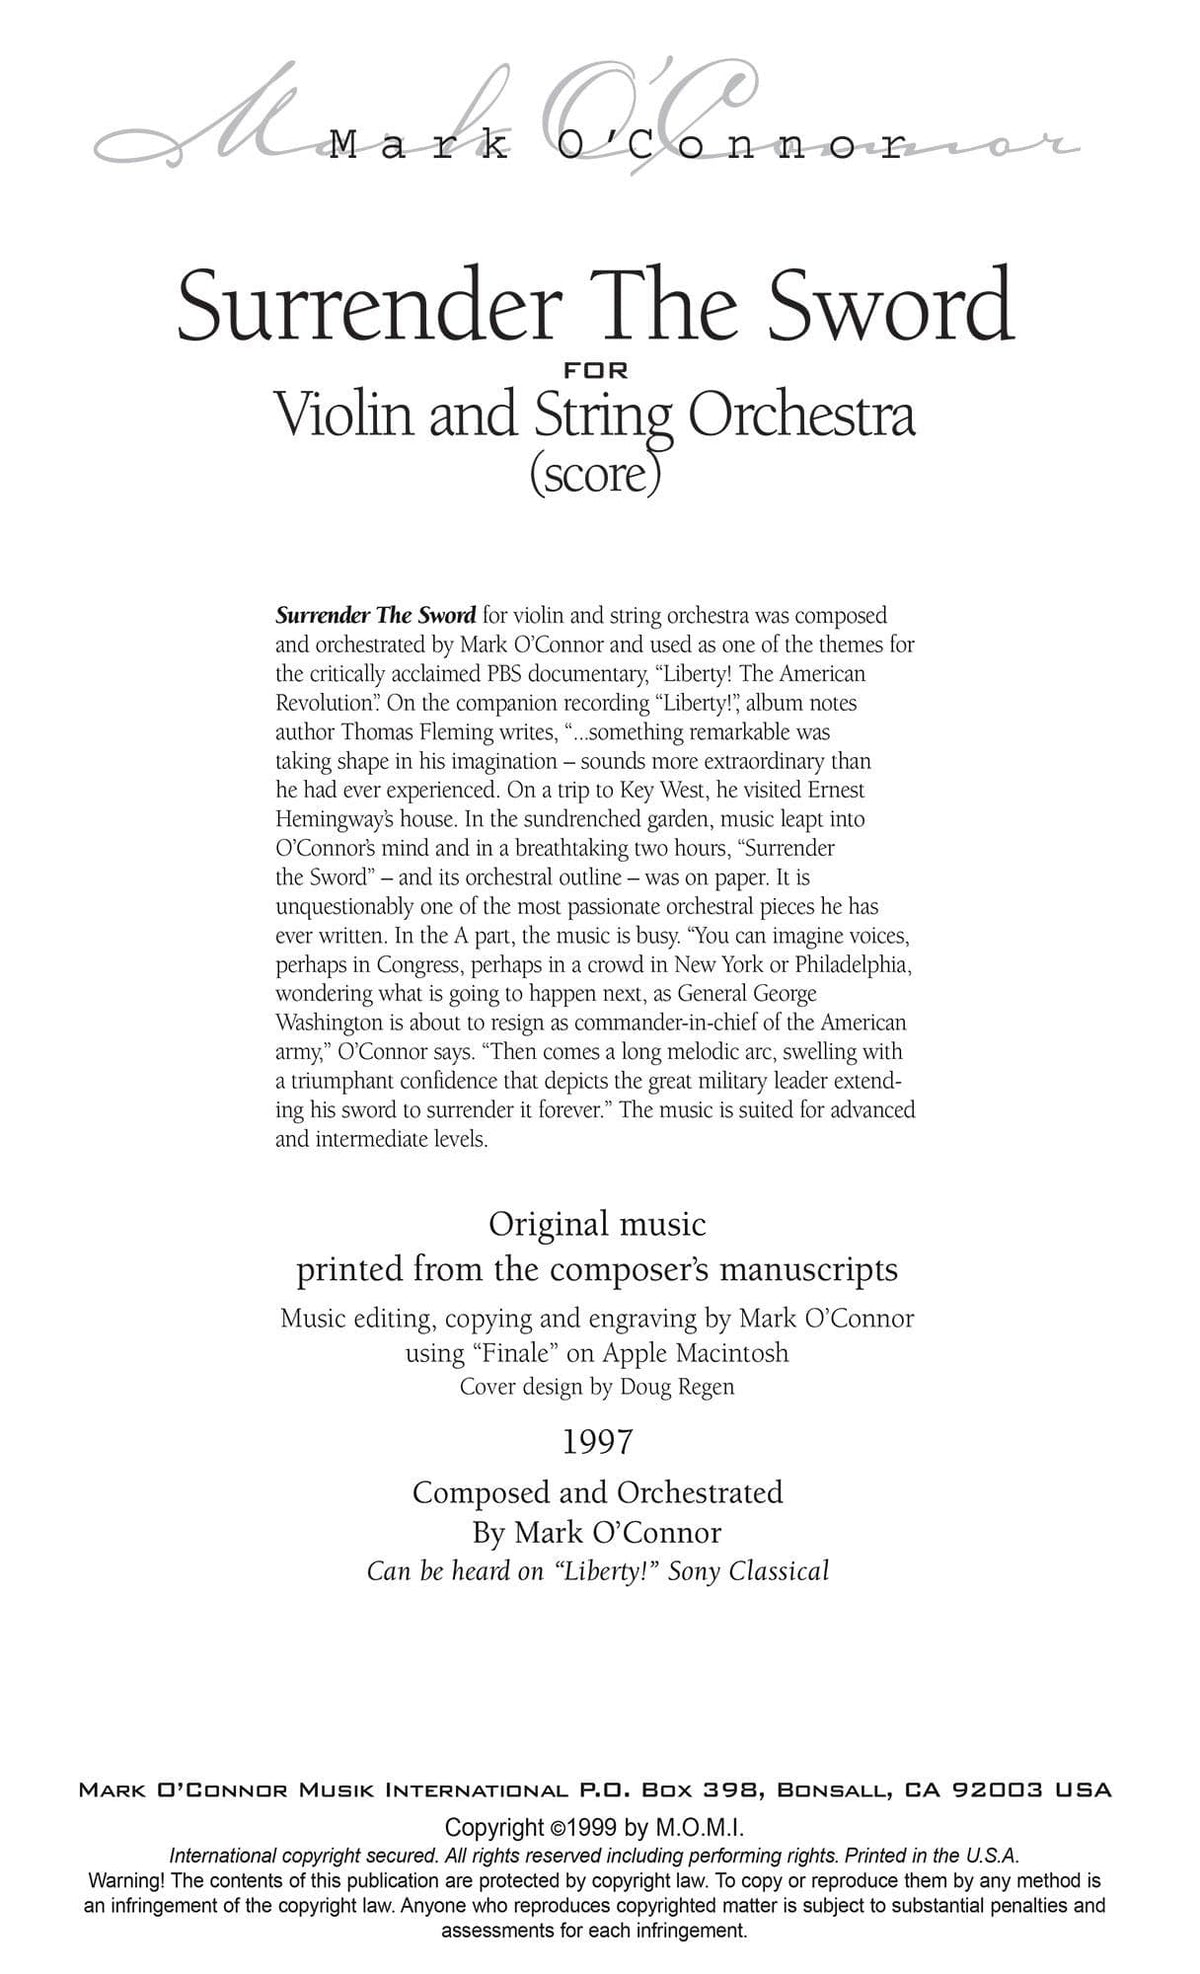 O'Connor, Mark - Surrender The Sword for Violin and String Orchestra - Score - Digital Download